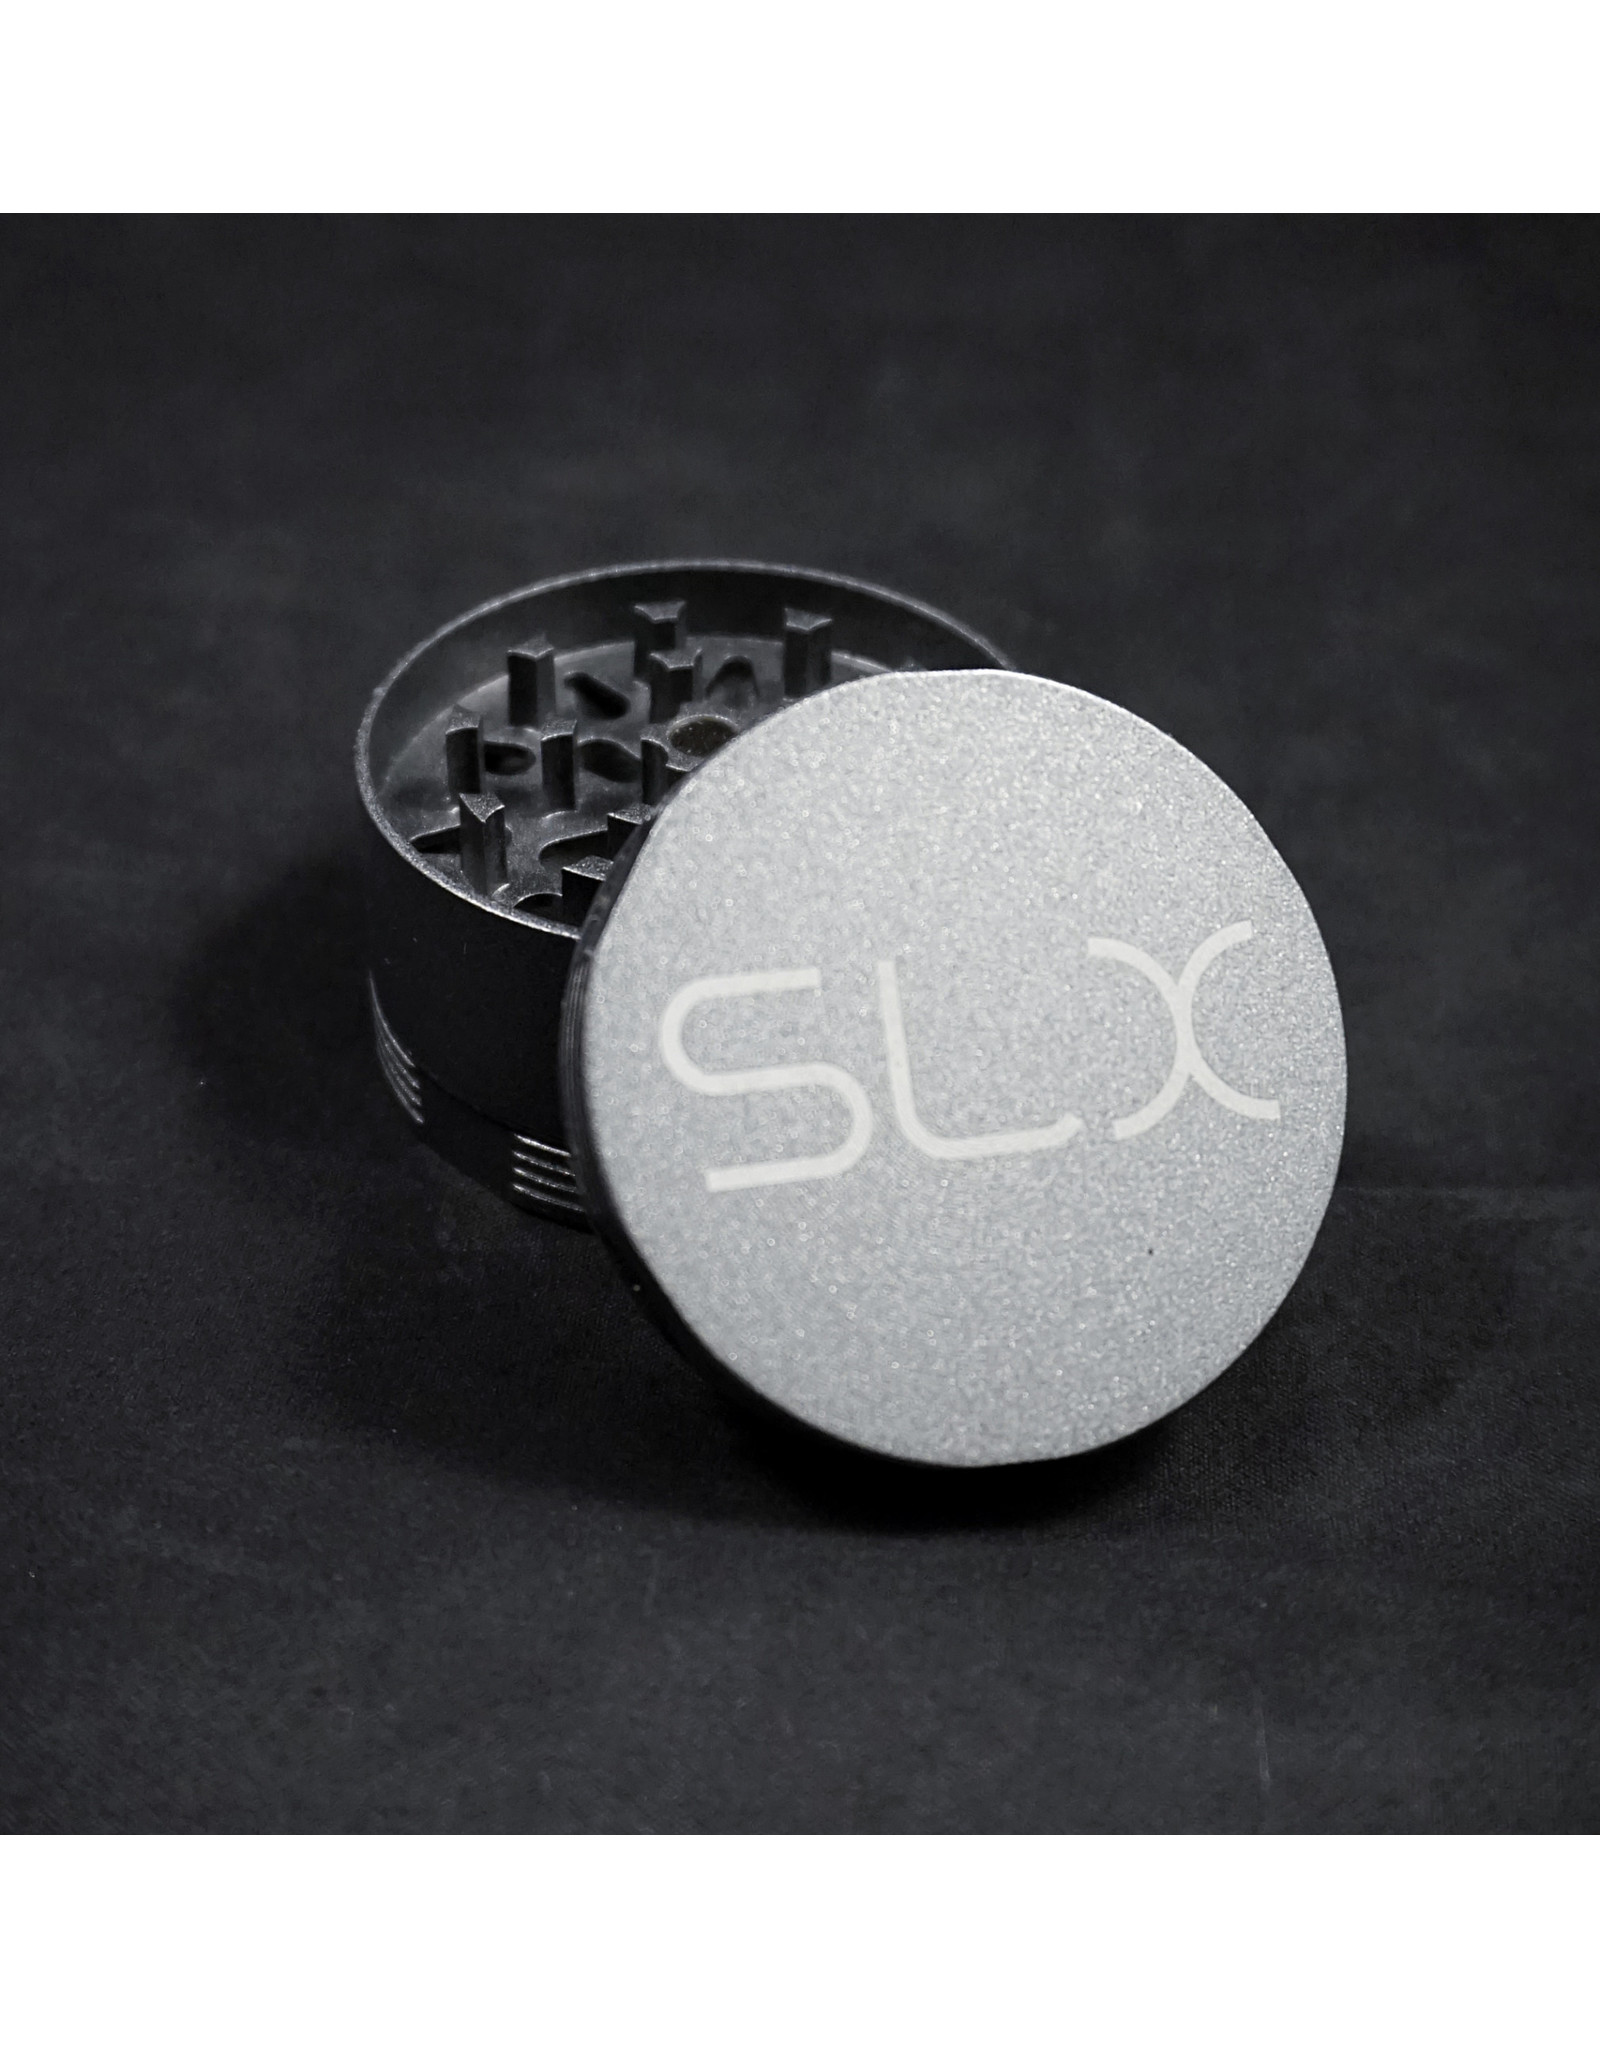 SLX SLX 2.0" 4pc - Silver